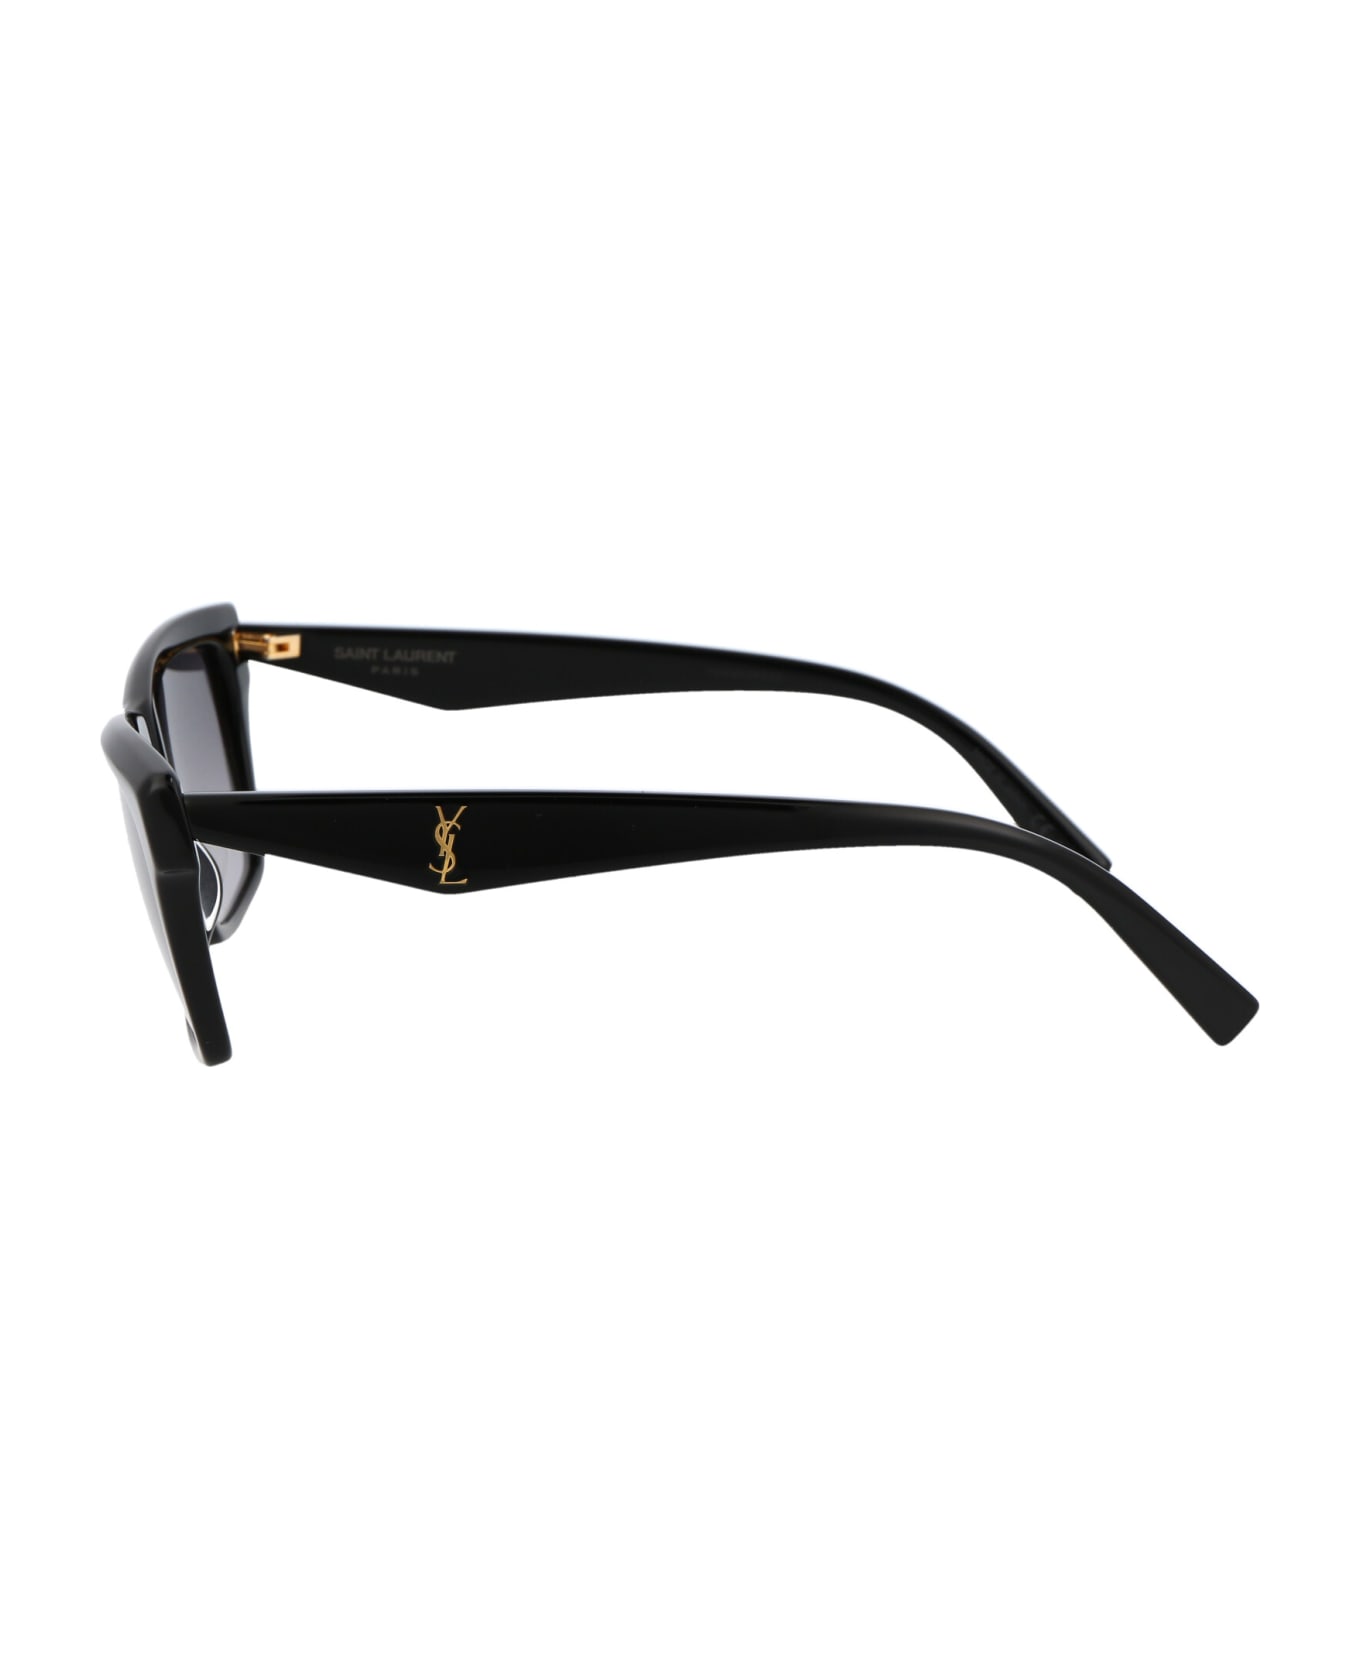 Saint Laurent Eyewear Sl M104 Sunglasses - 001 BLACK BLACK GREY